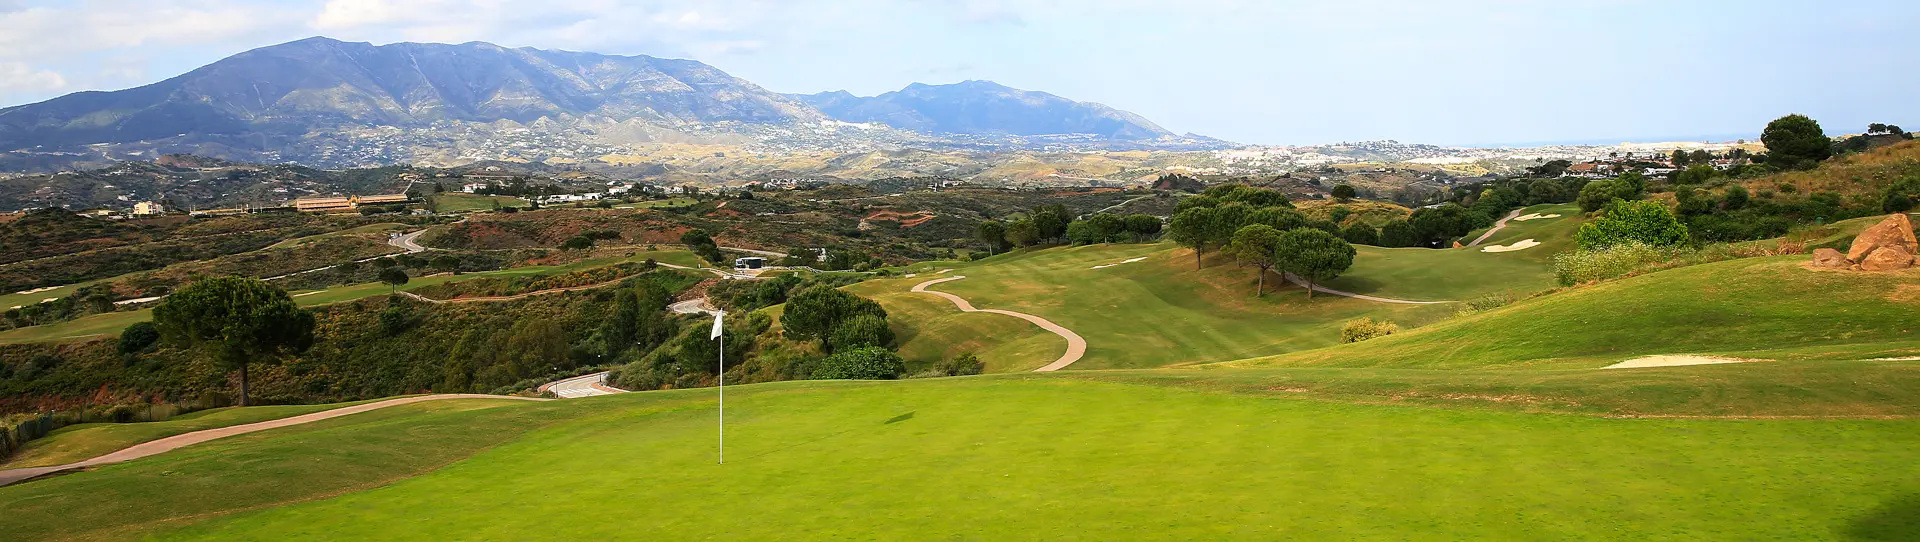 Spain Golf Driving Range - La Cala Resort Academy - Photo 1